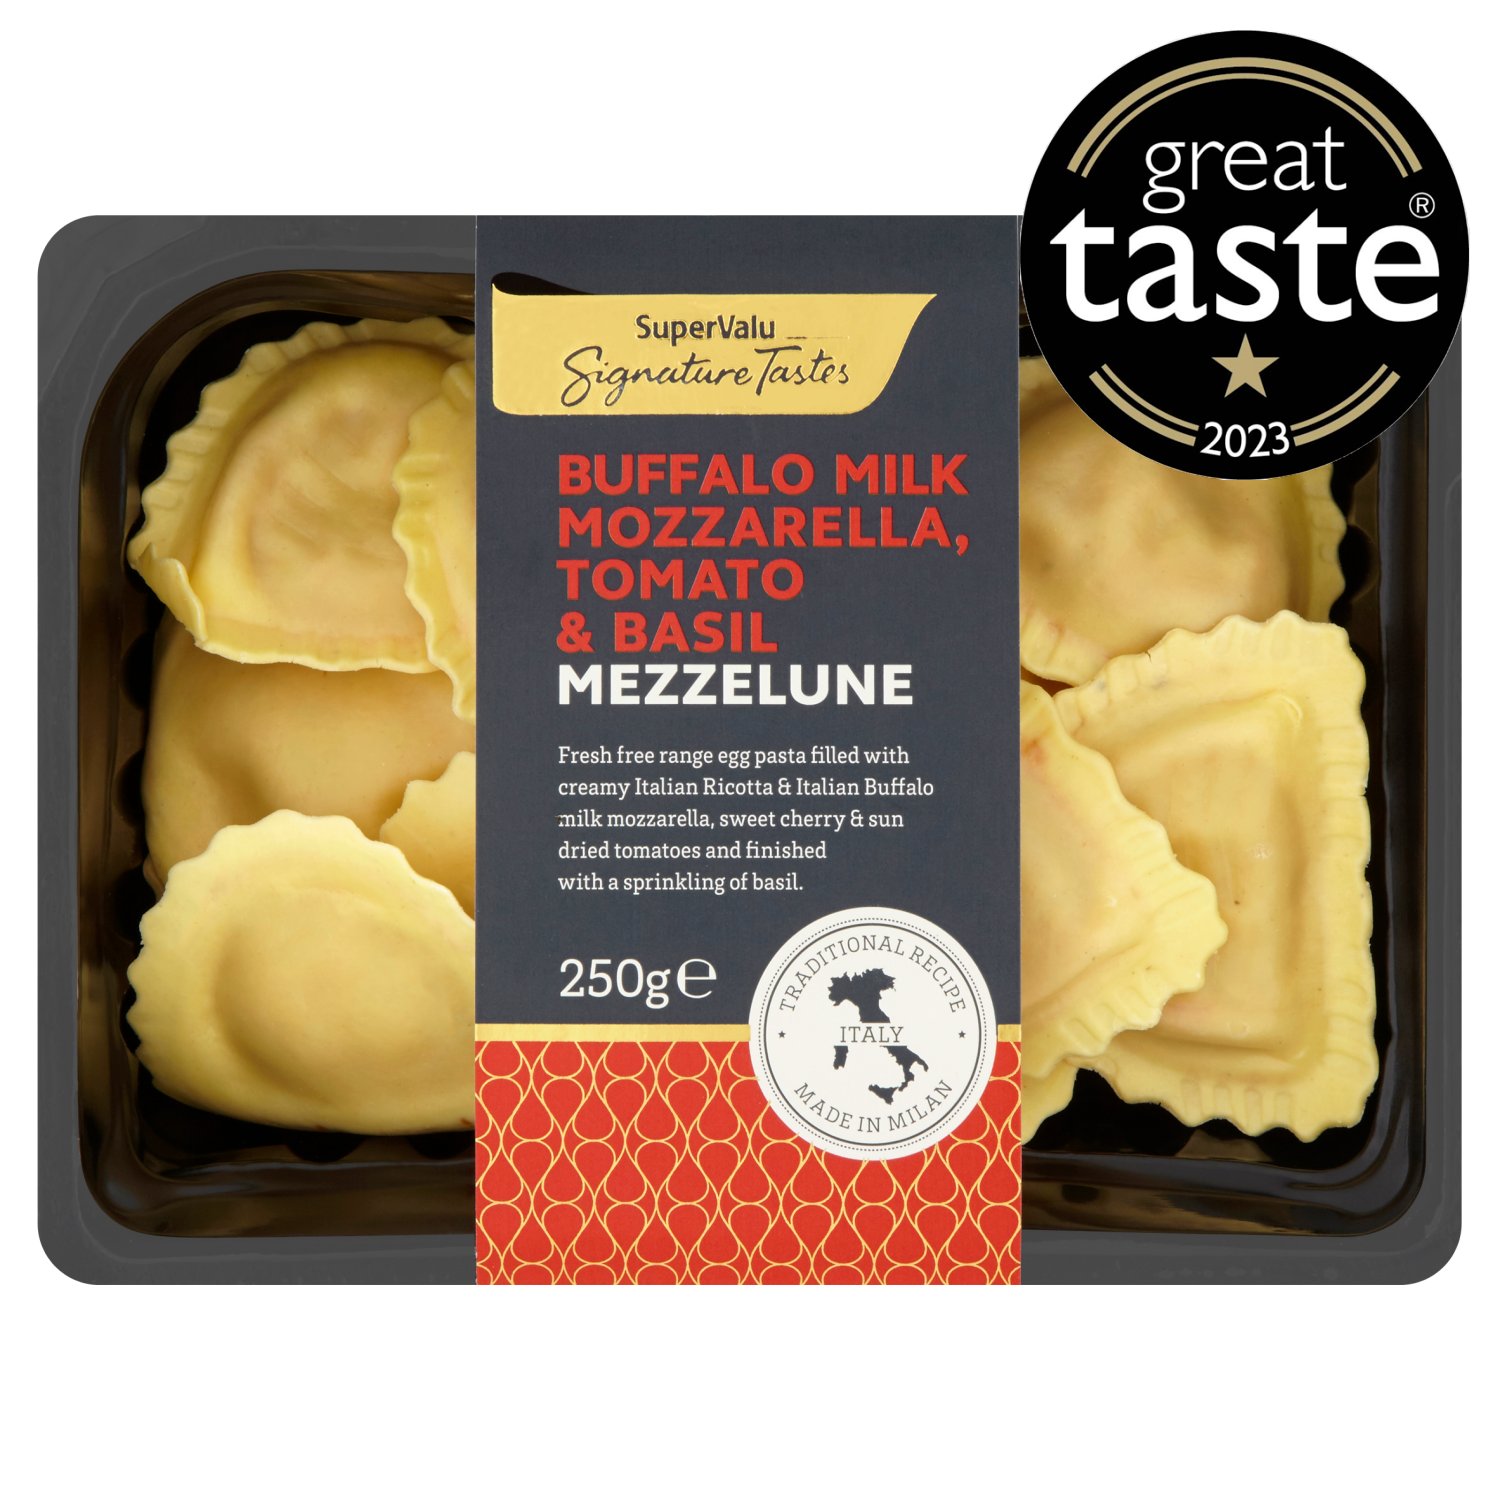 Signature Tastes Buffalo Milk Mozzarella, Tomato & Basil Mezzelune (250 g)